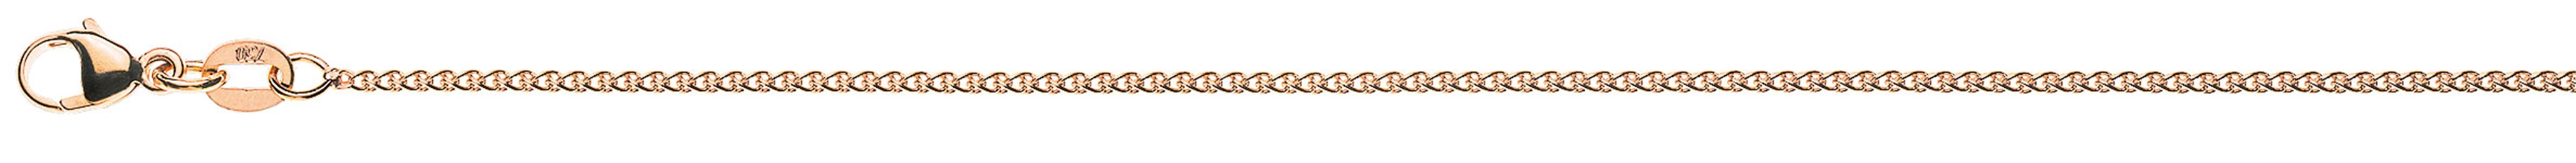 AURONOS Prestige Rose gold necklace 18K rose gold cable chain 50cm 1.2mm